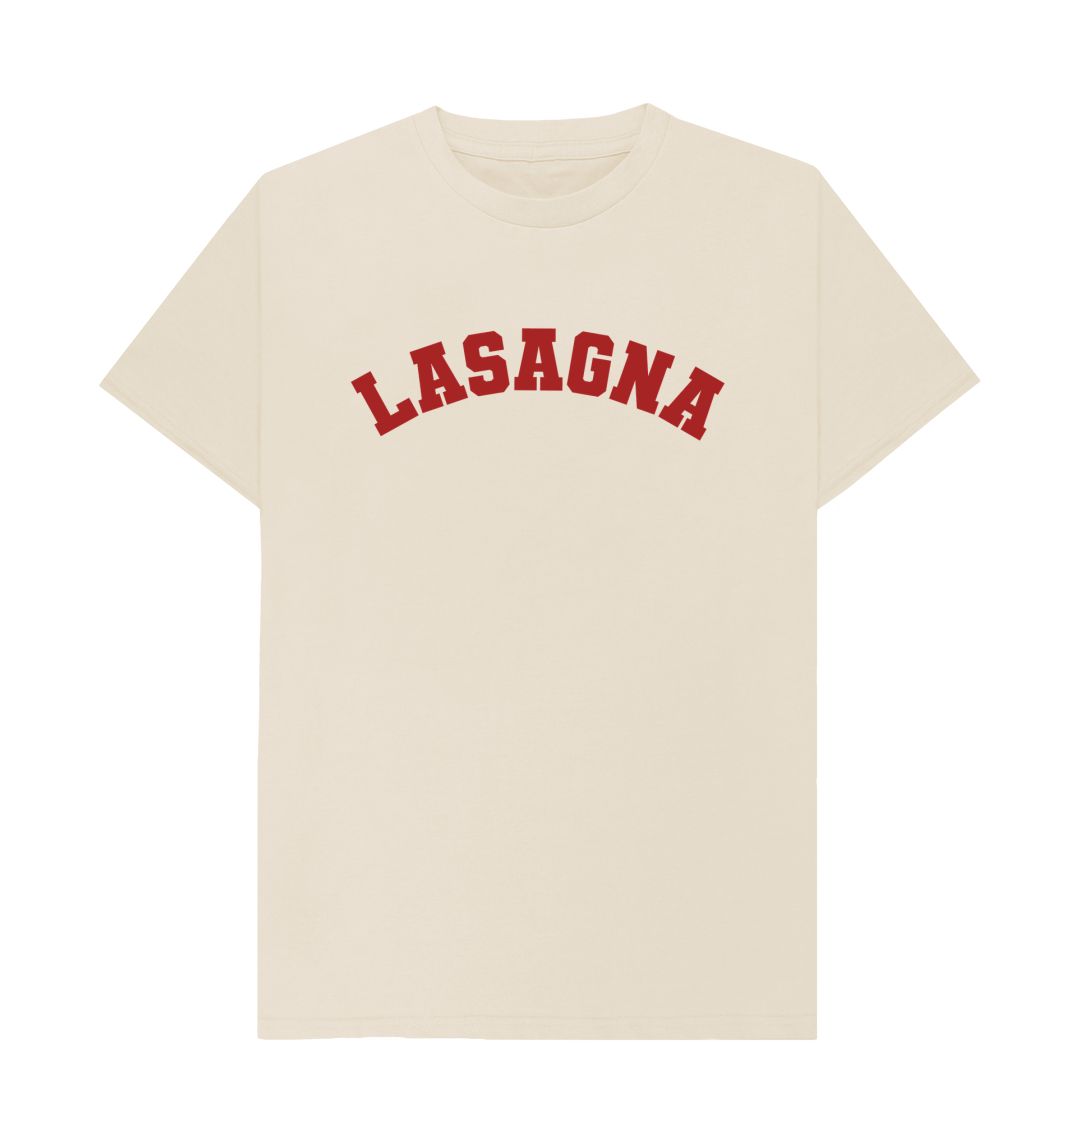 Oat Lasagna varsity t-shirt